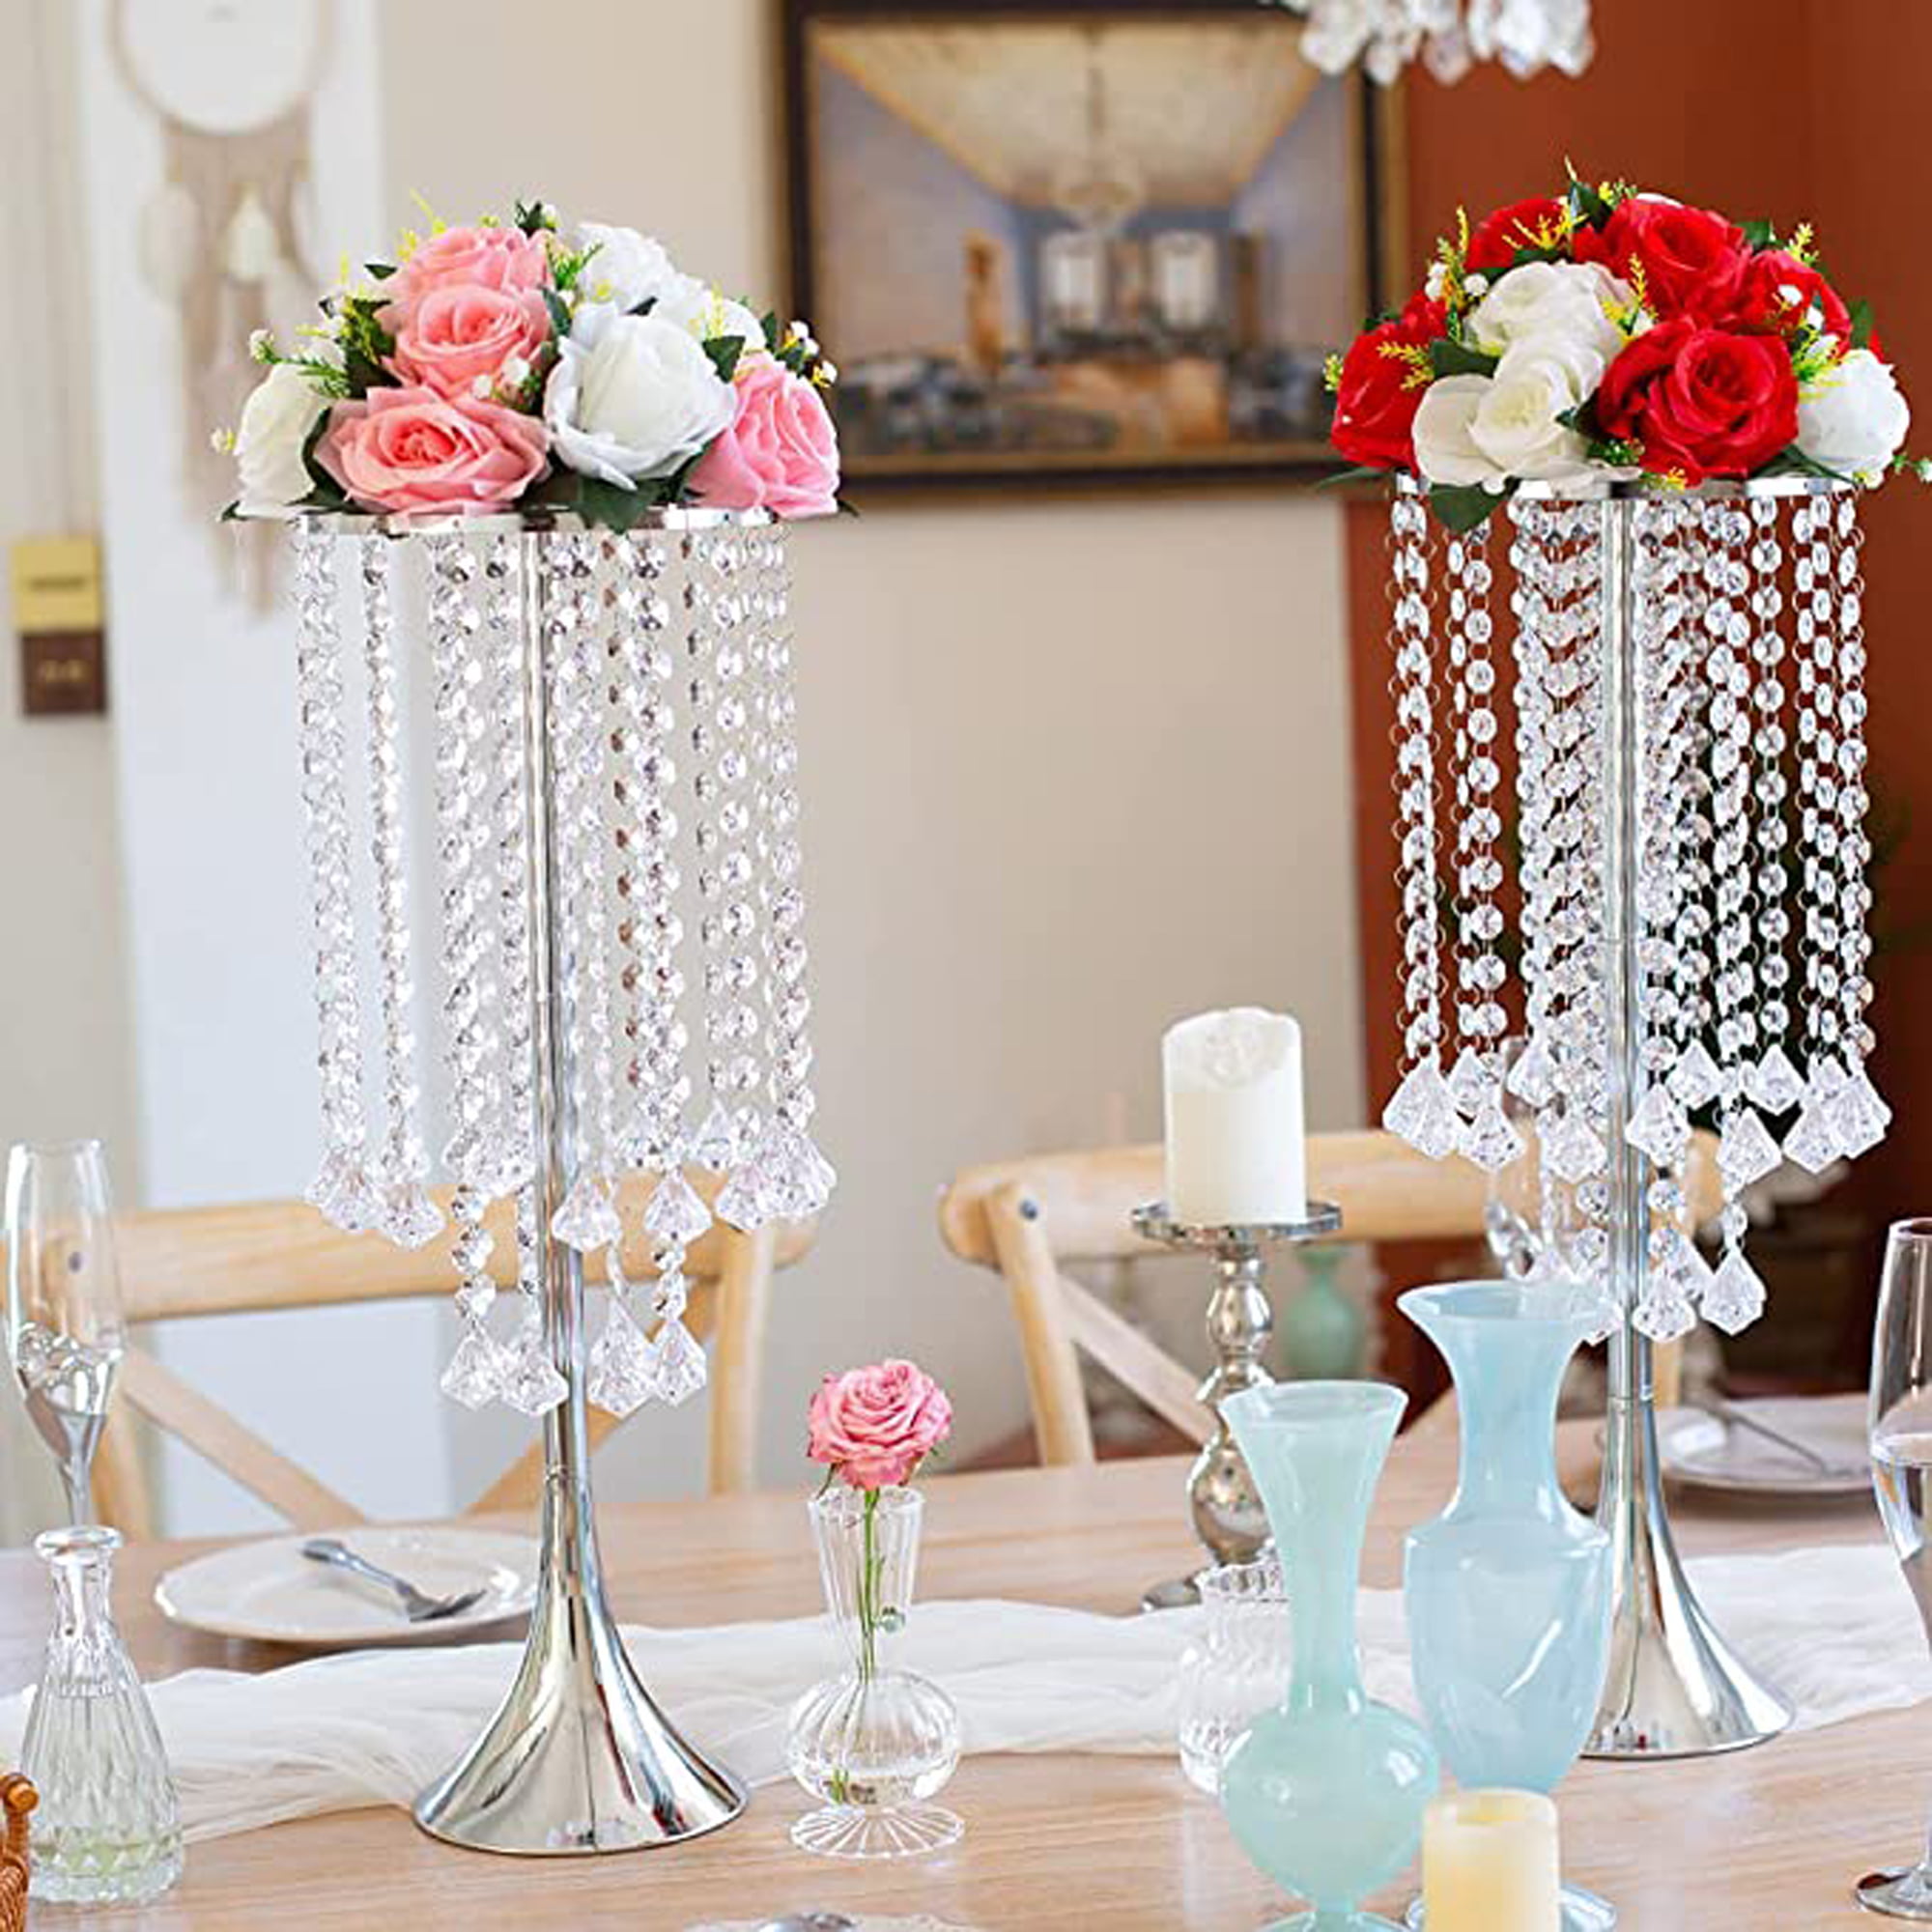 LORYDECO 2 Pcs Versatile Metal Flower Arrangement Stand, Elegant Wedding  Centerpieces Flower Vase, Crystal Flower Stand for Wedding Party Dinner  Event